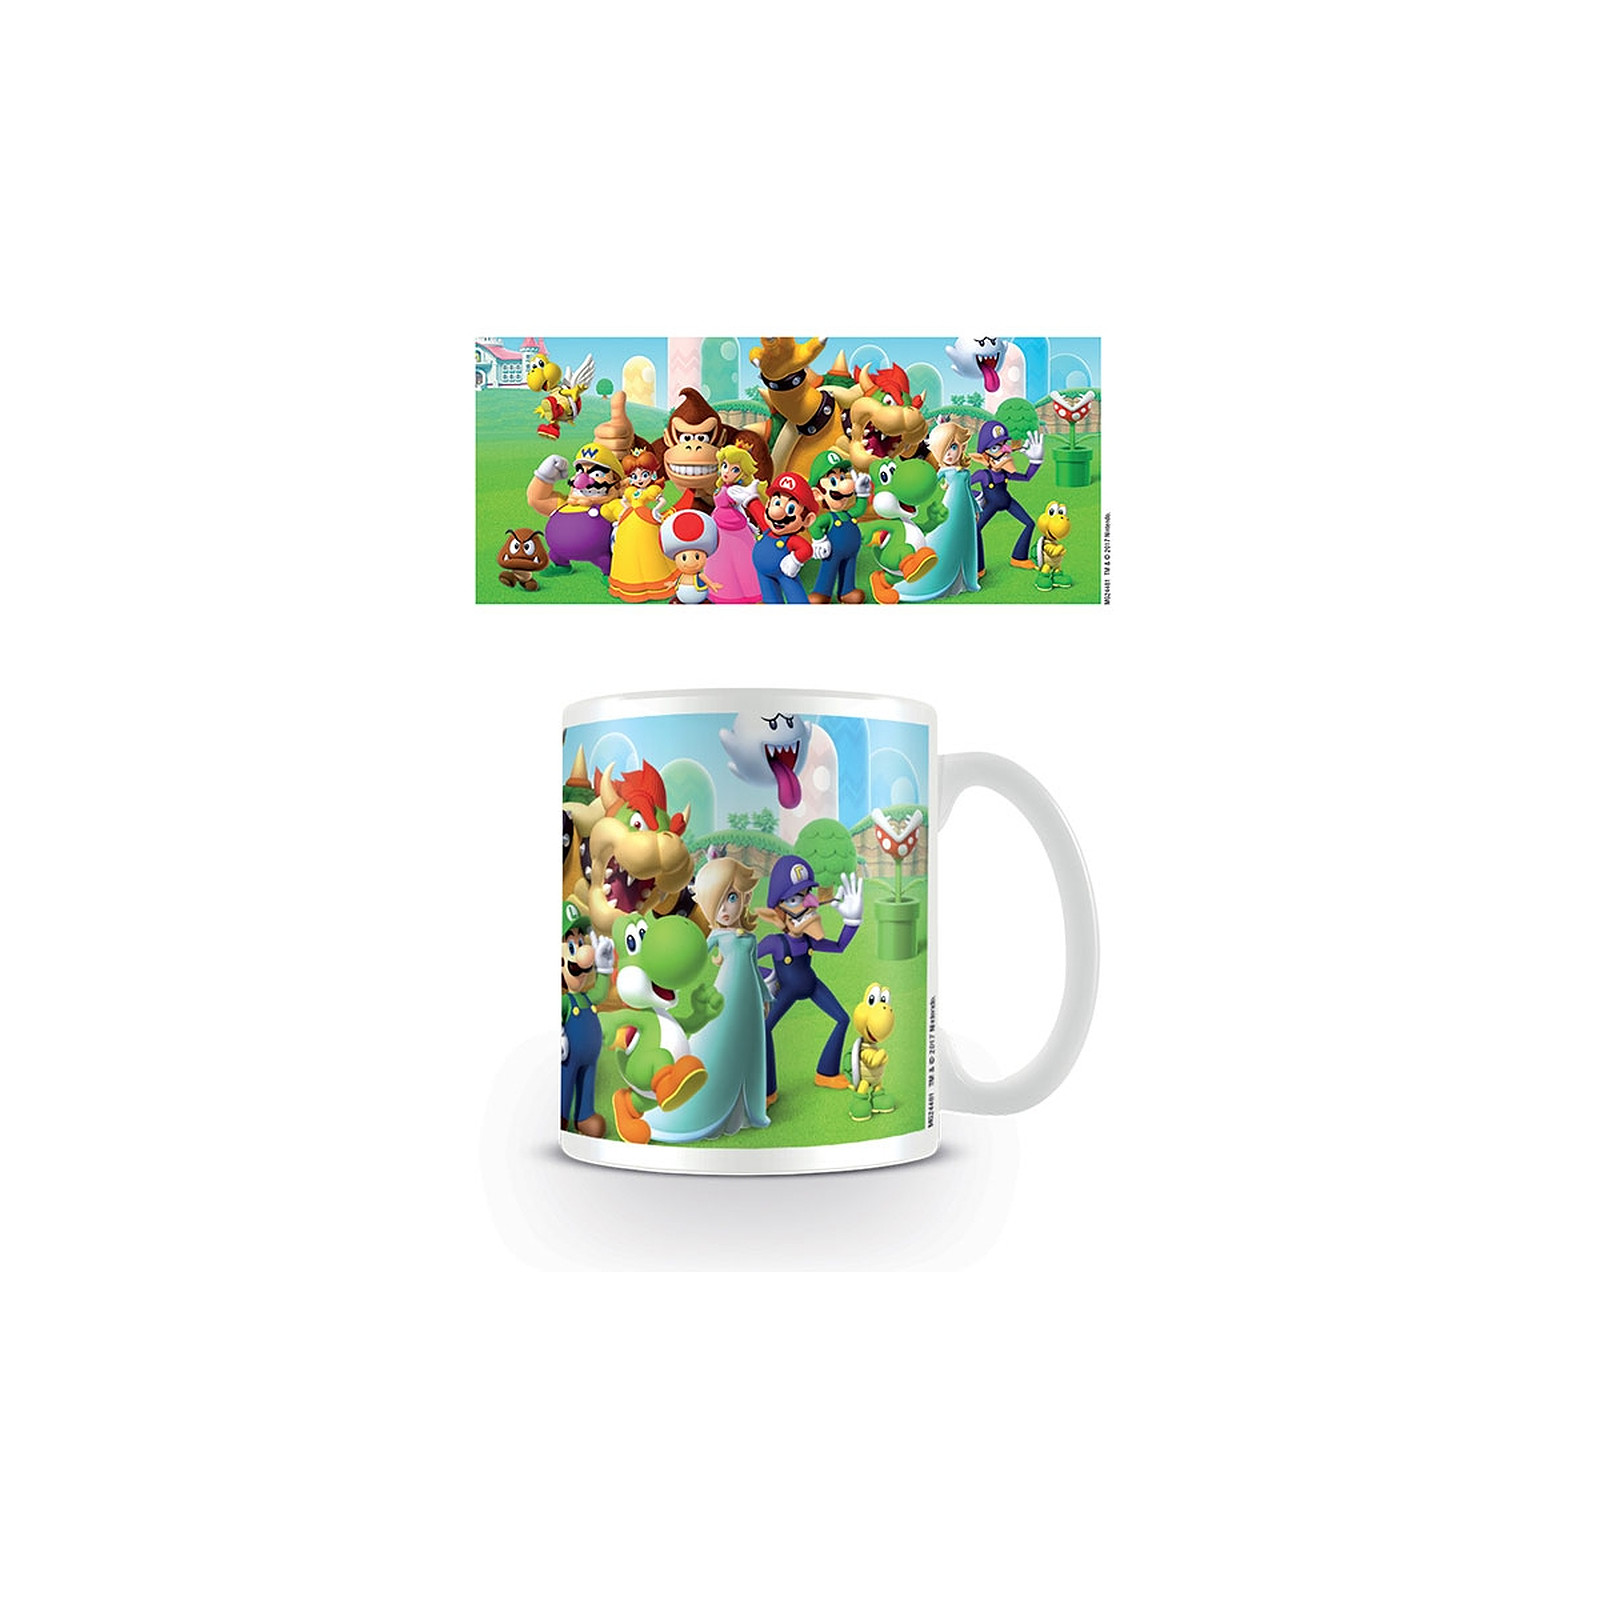 Super Mario - Mug Mushroom Kingdom - Mugs Pyramid International